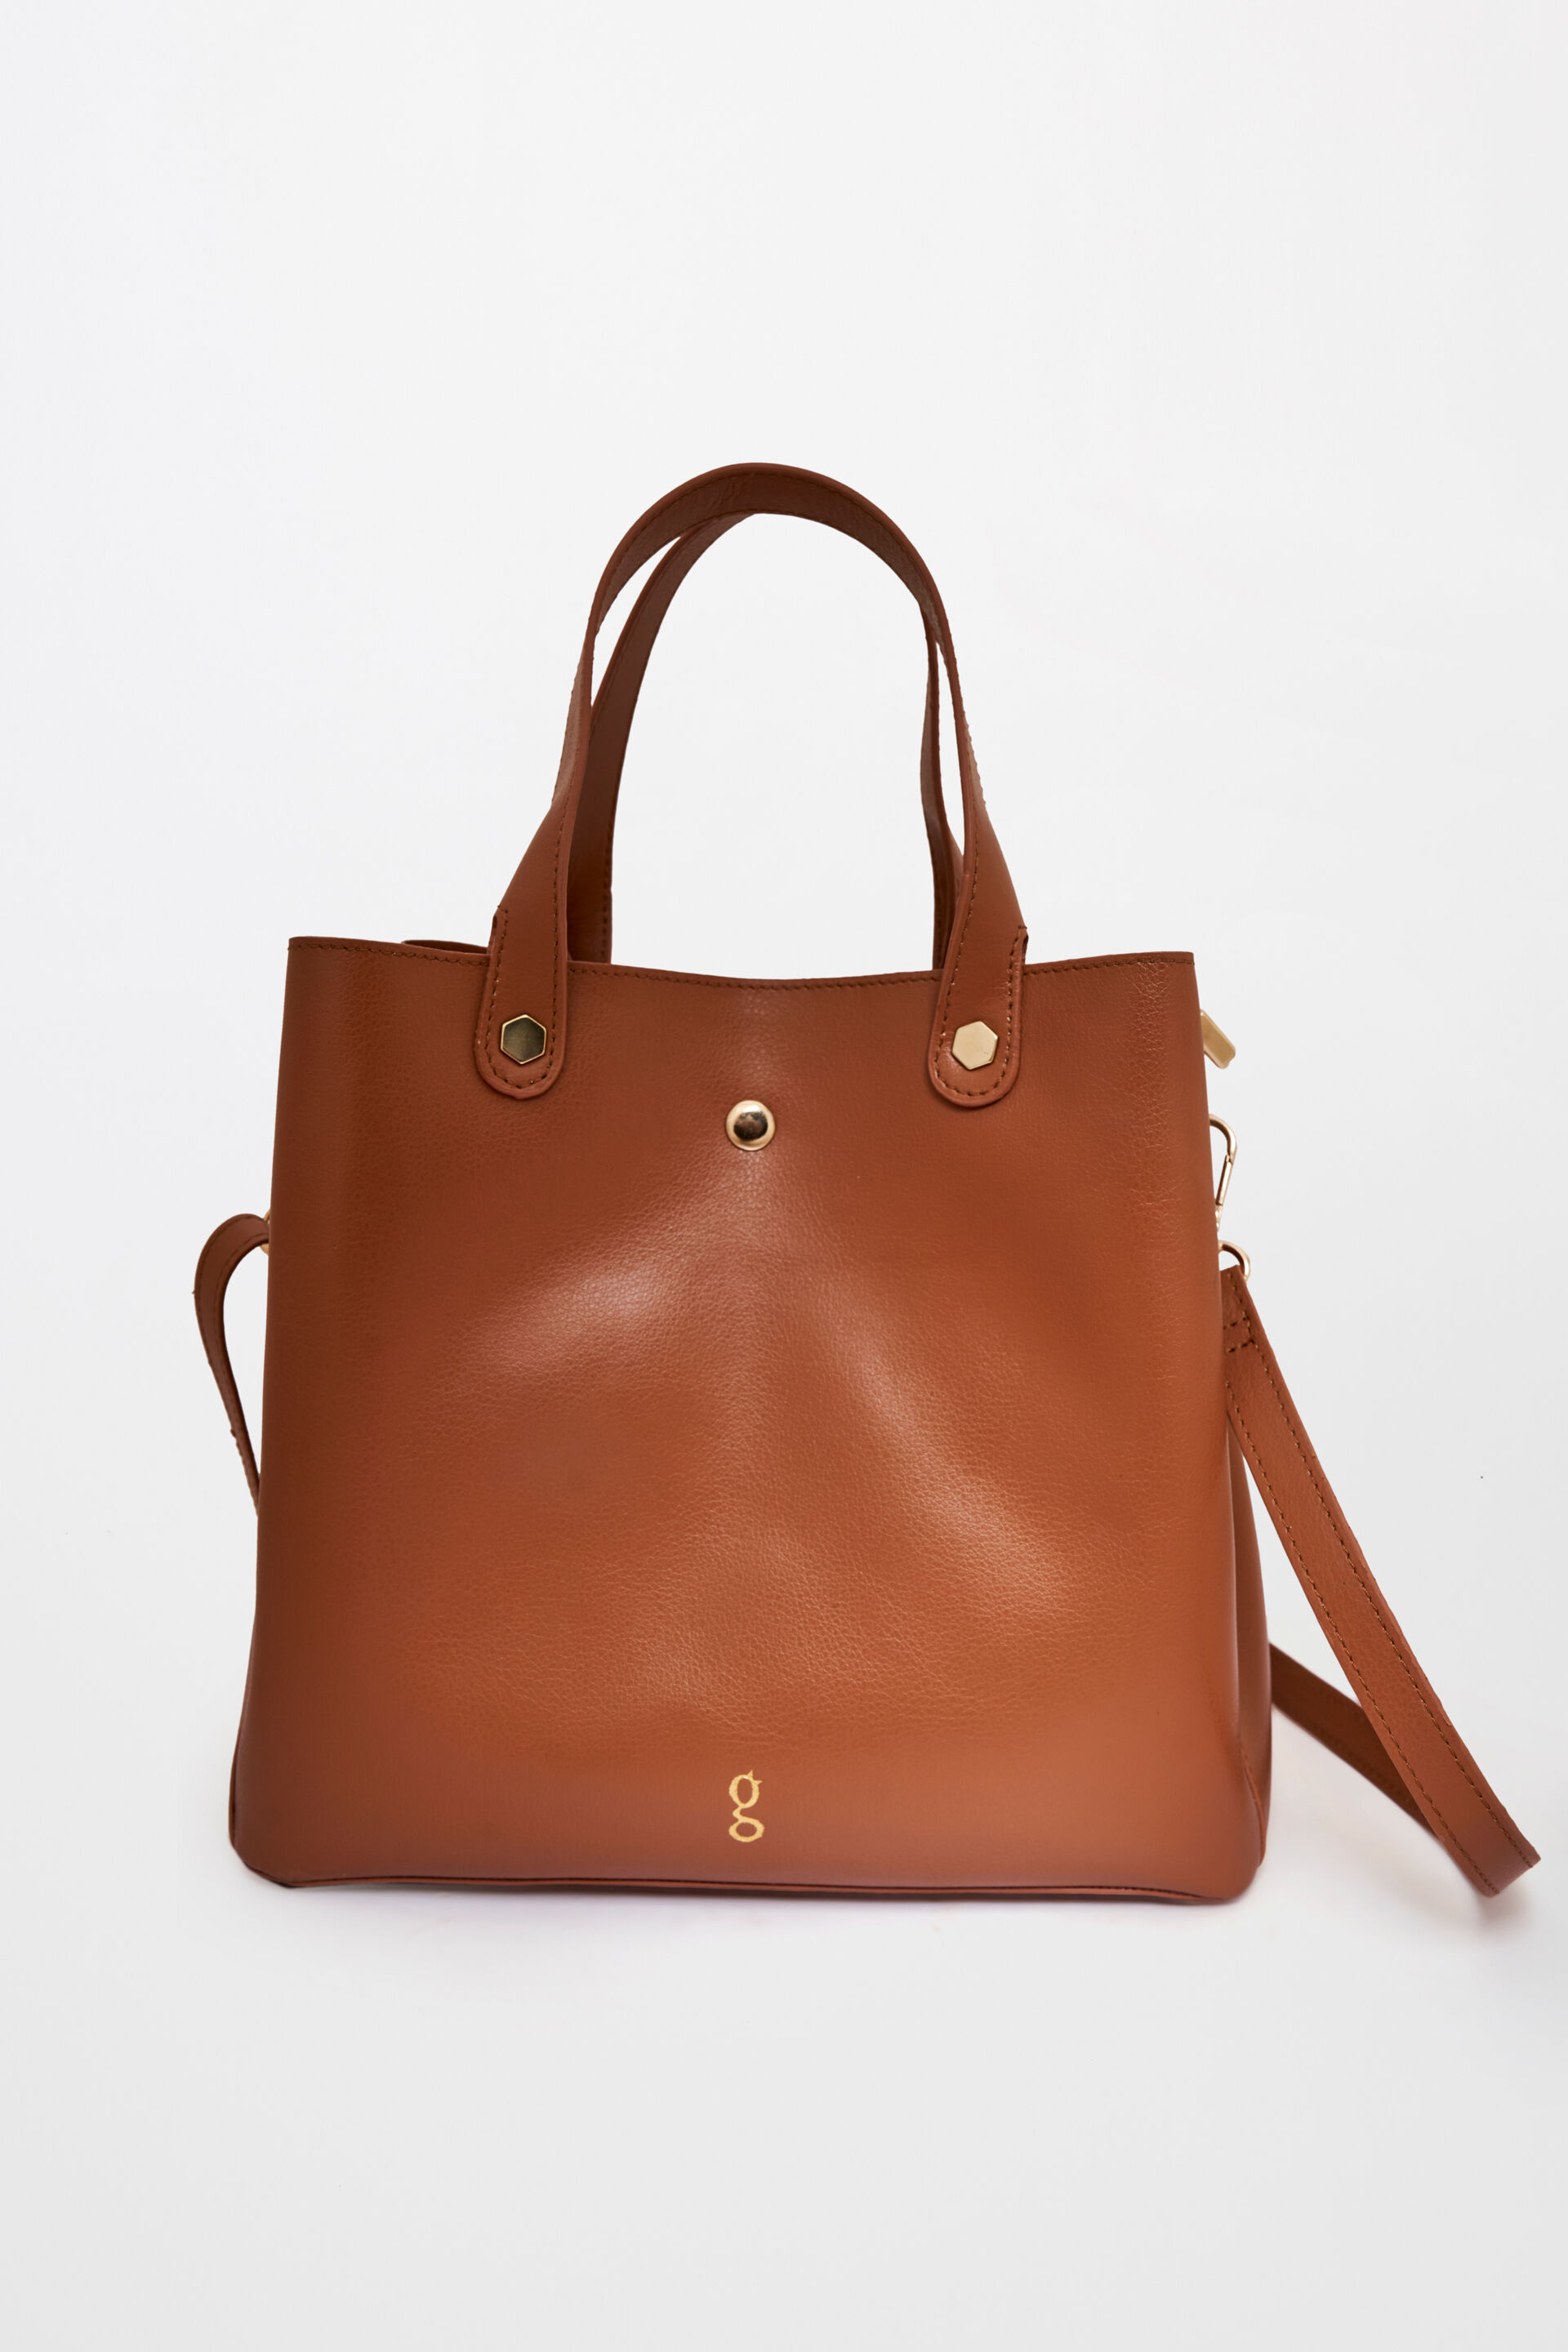 Buy Women Fashion Handbag Shoulder Bag Tote Ladies PU Leather Purse in  Pakistan | online shopping in Pakistan